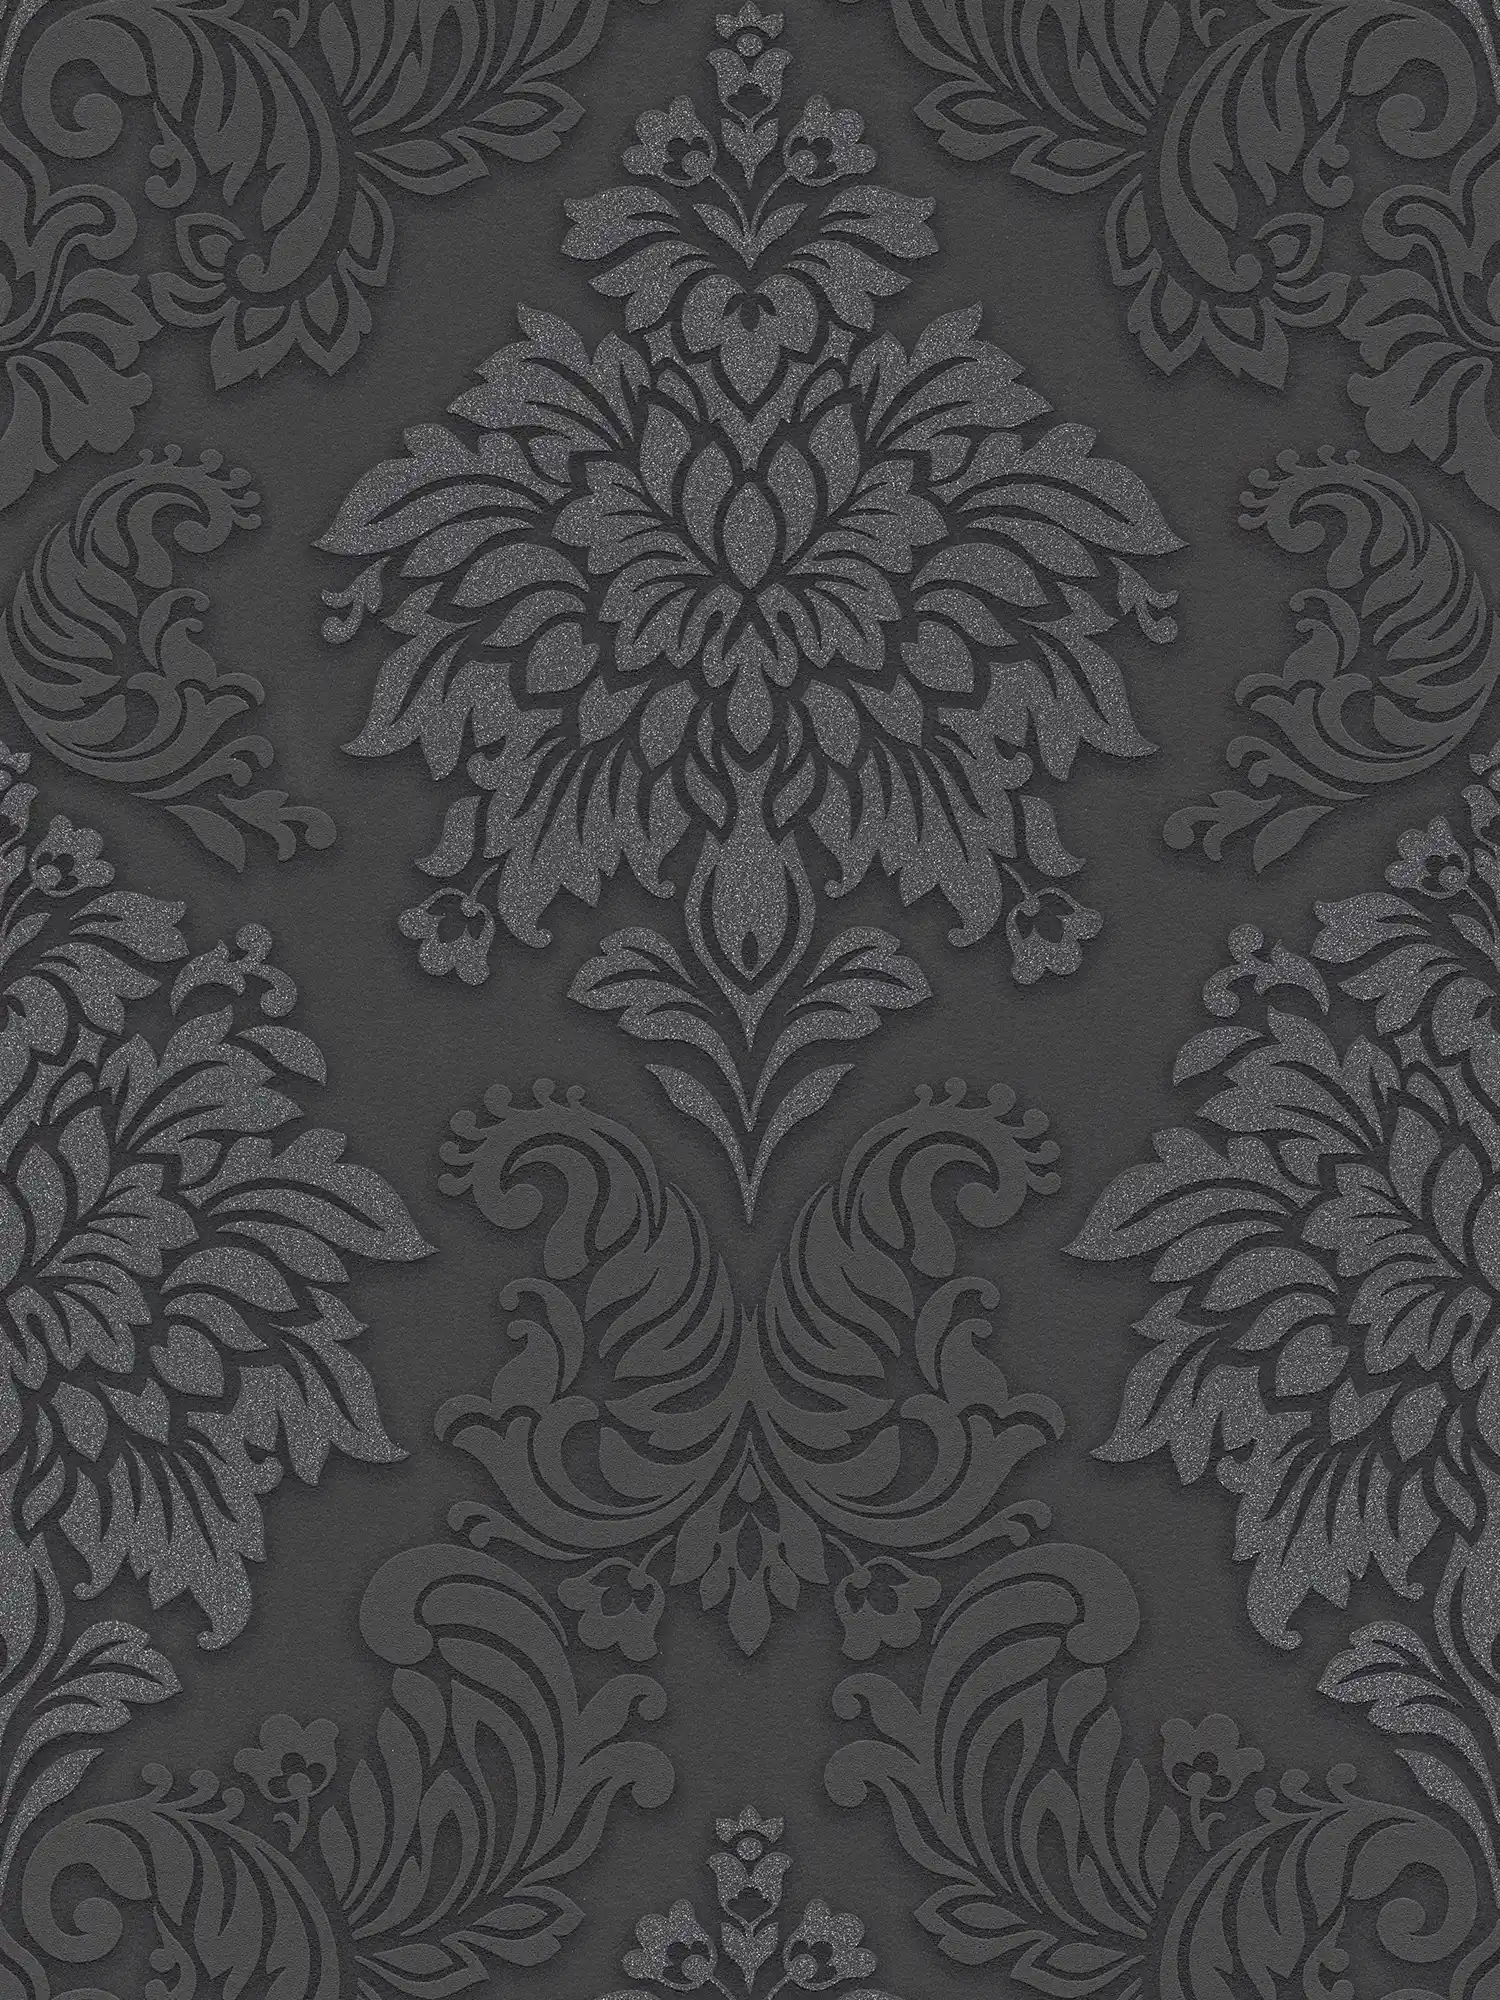 Baroque wallpaper ornaments with glitter effect - black, silver, grey
